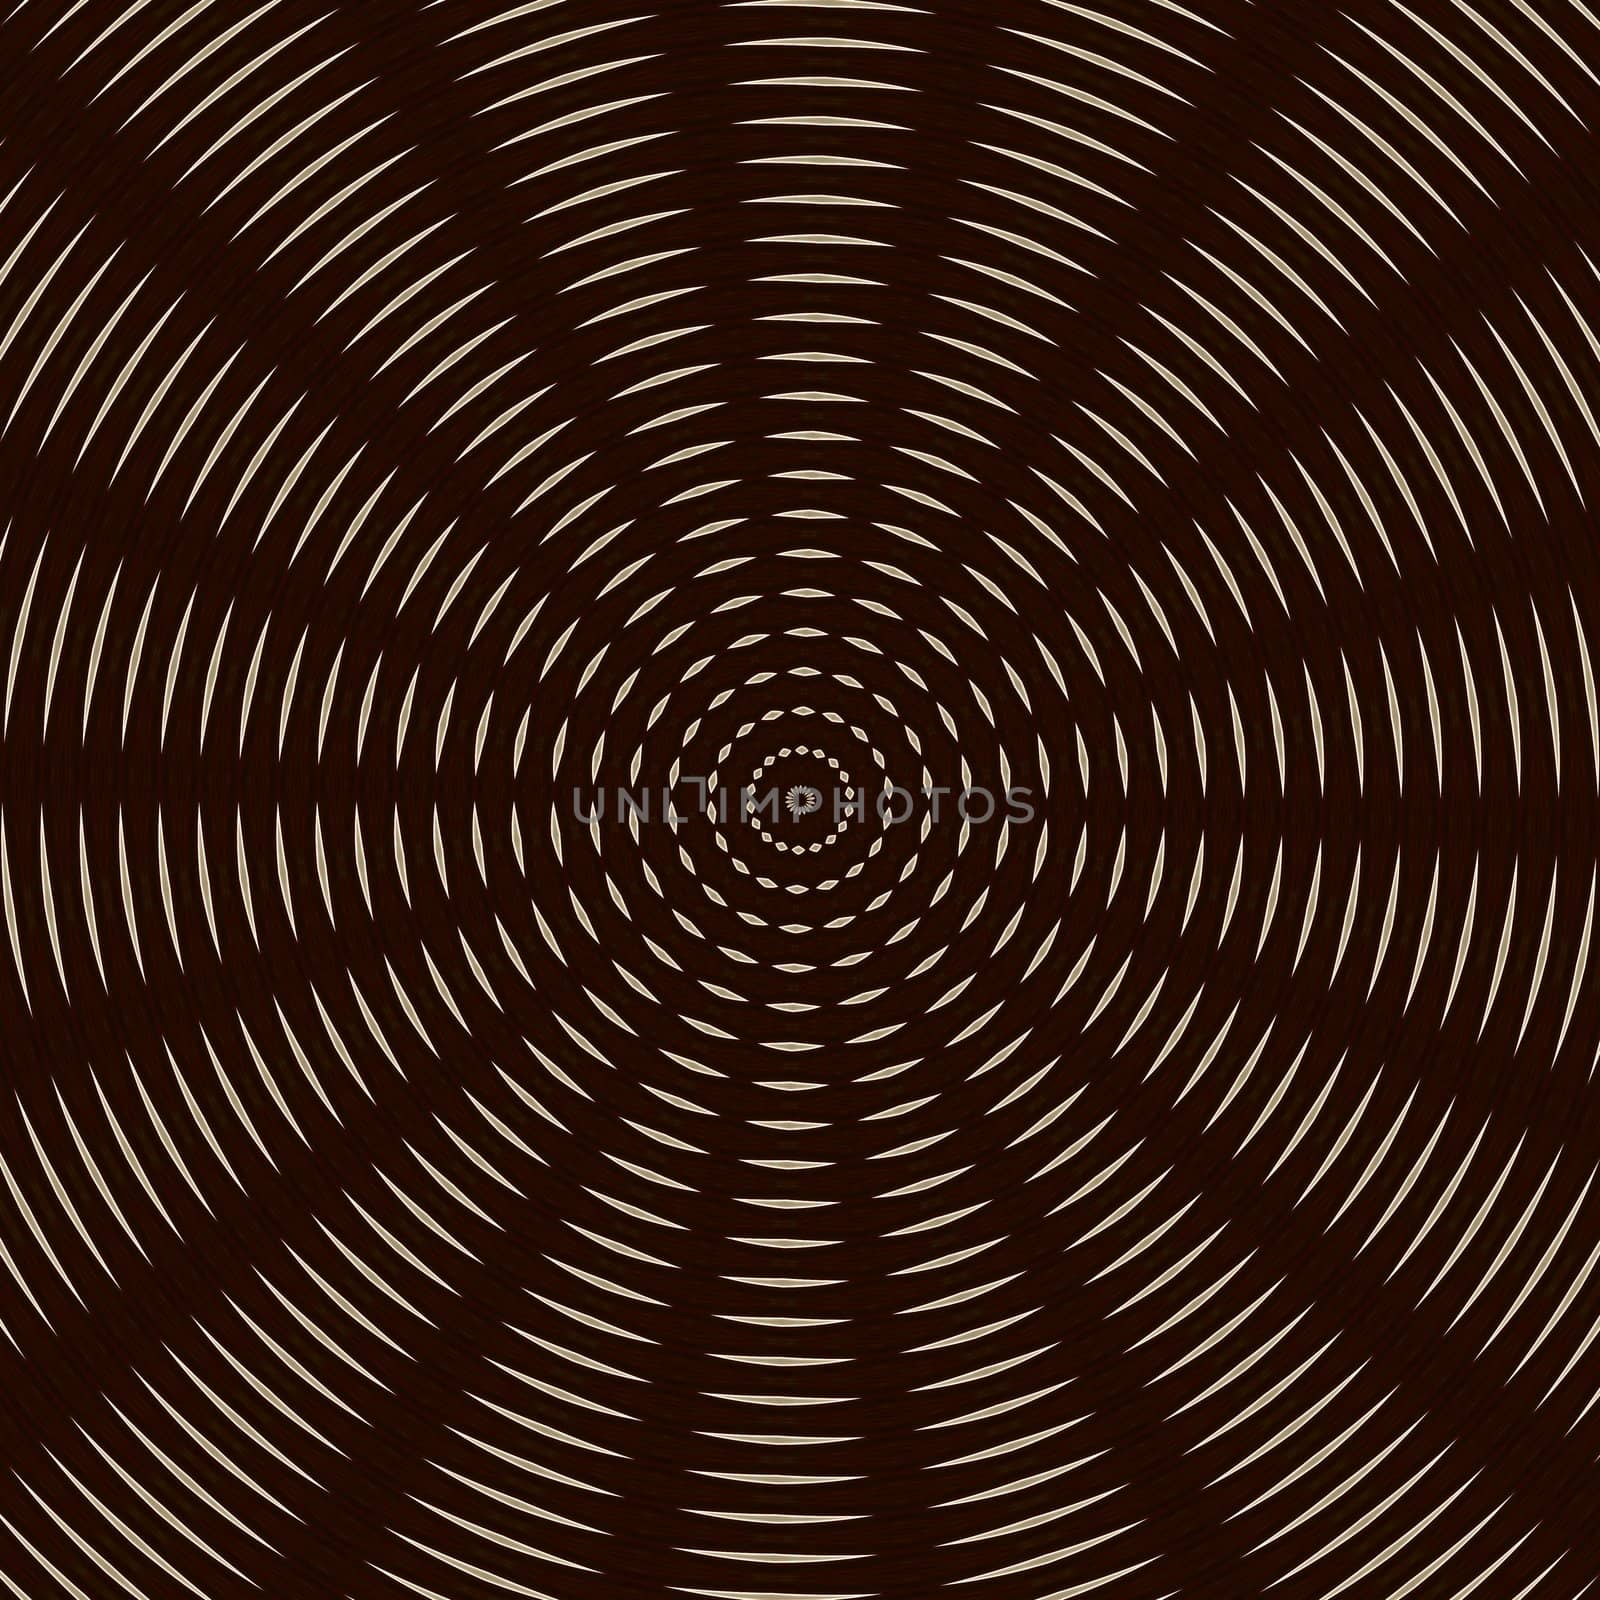 Abstract circular background illustration